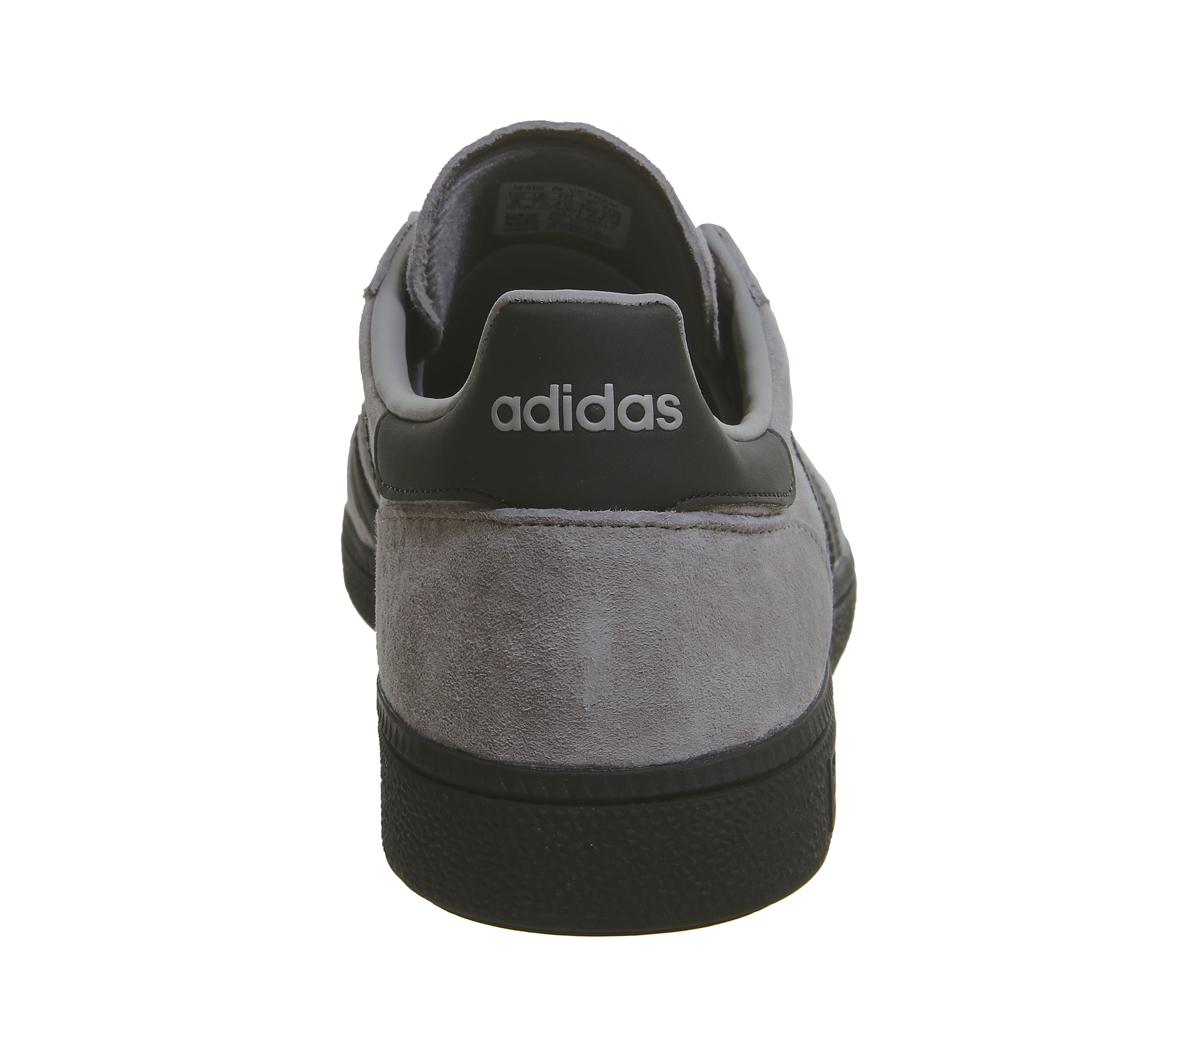 grey and black adidas spezial